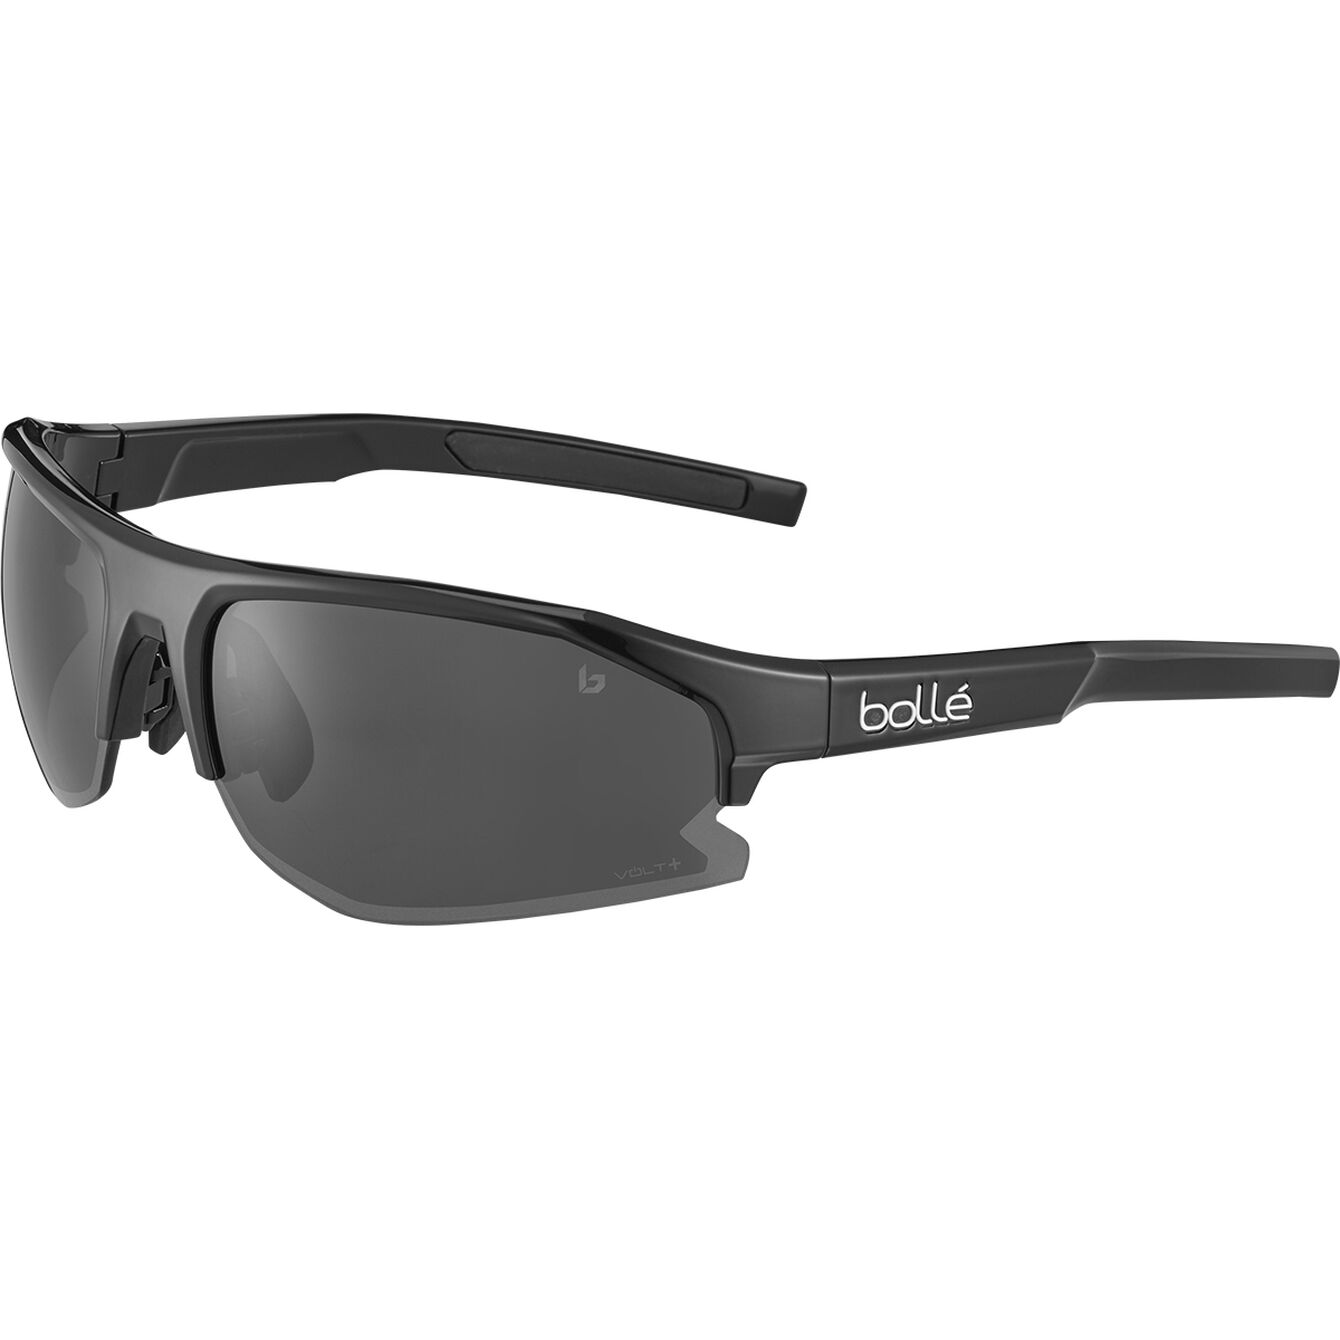 Bolle BS003005 Bolt 2.0 Sunglasses - Black Shiny - TNS Cat 3.0